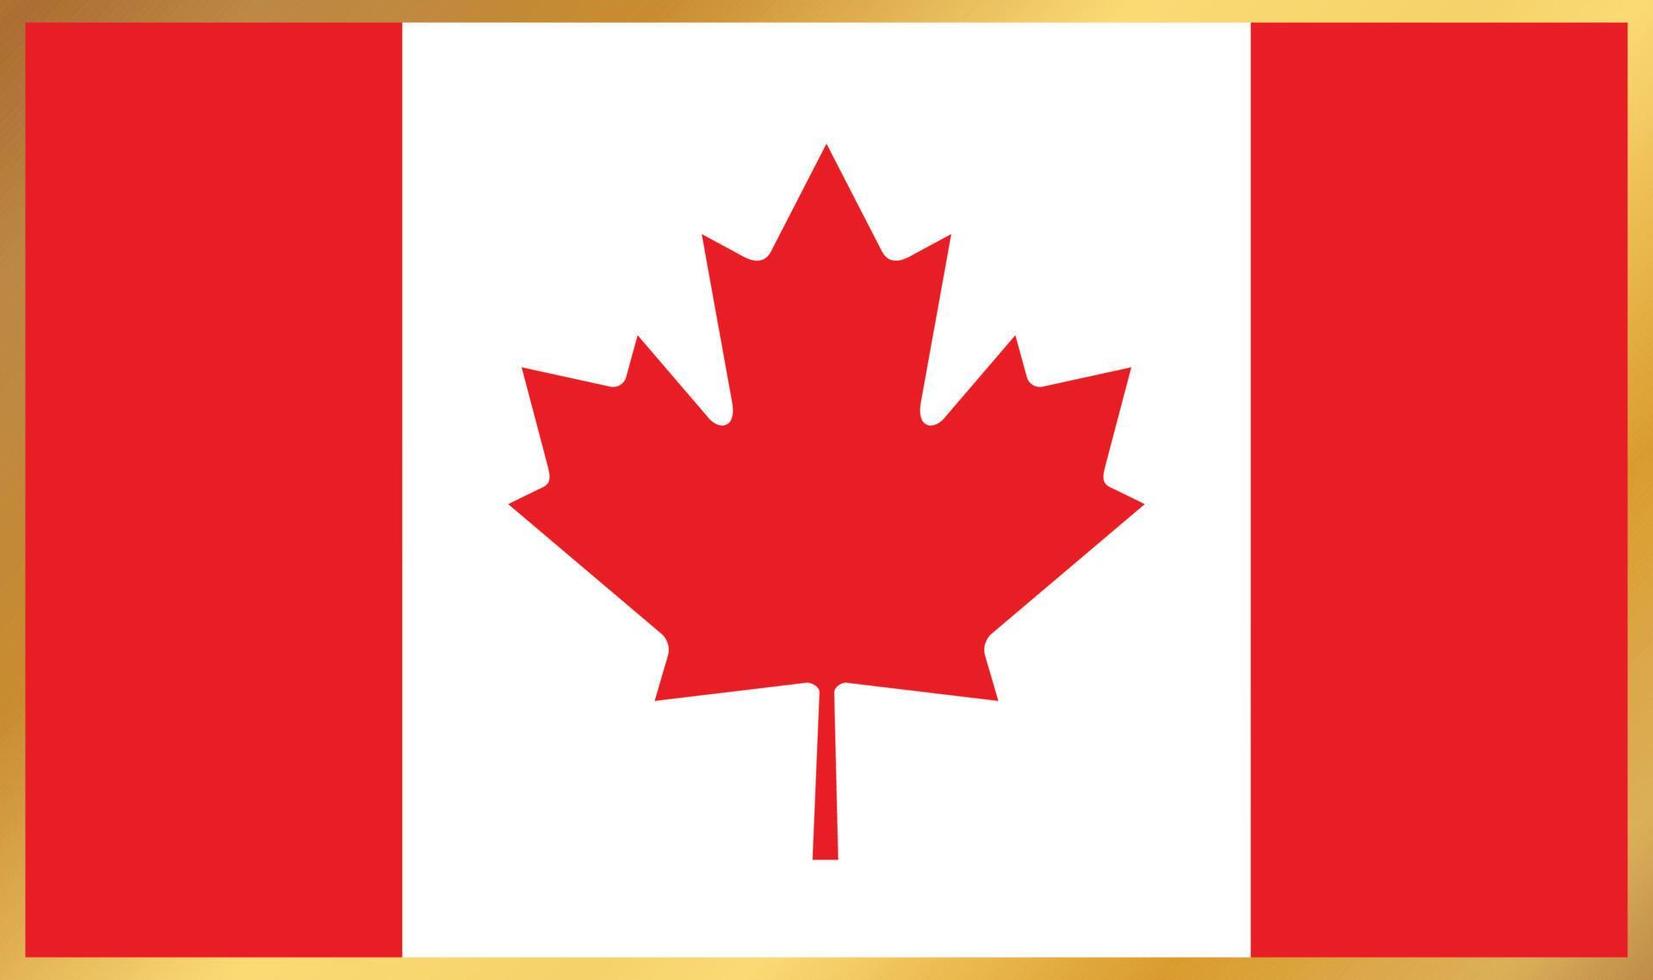 Canada flag, vector illustration